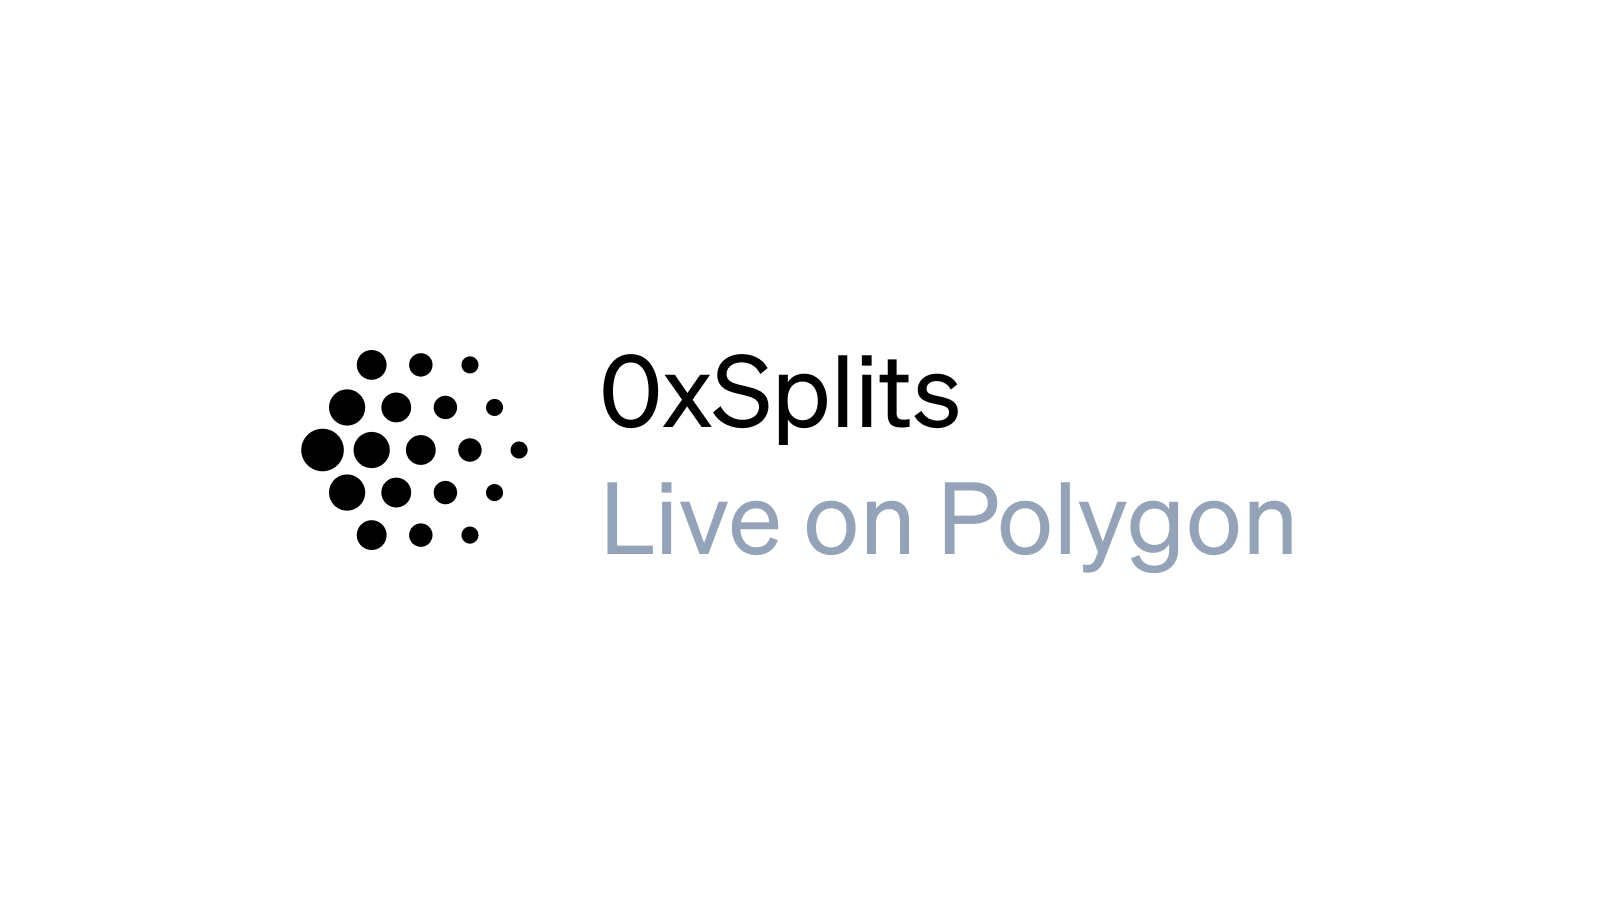 0xSplits is live on Polygon